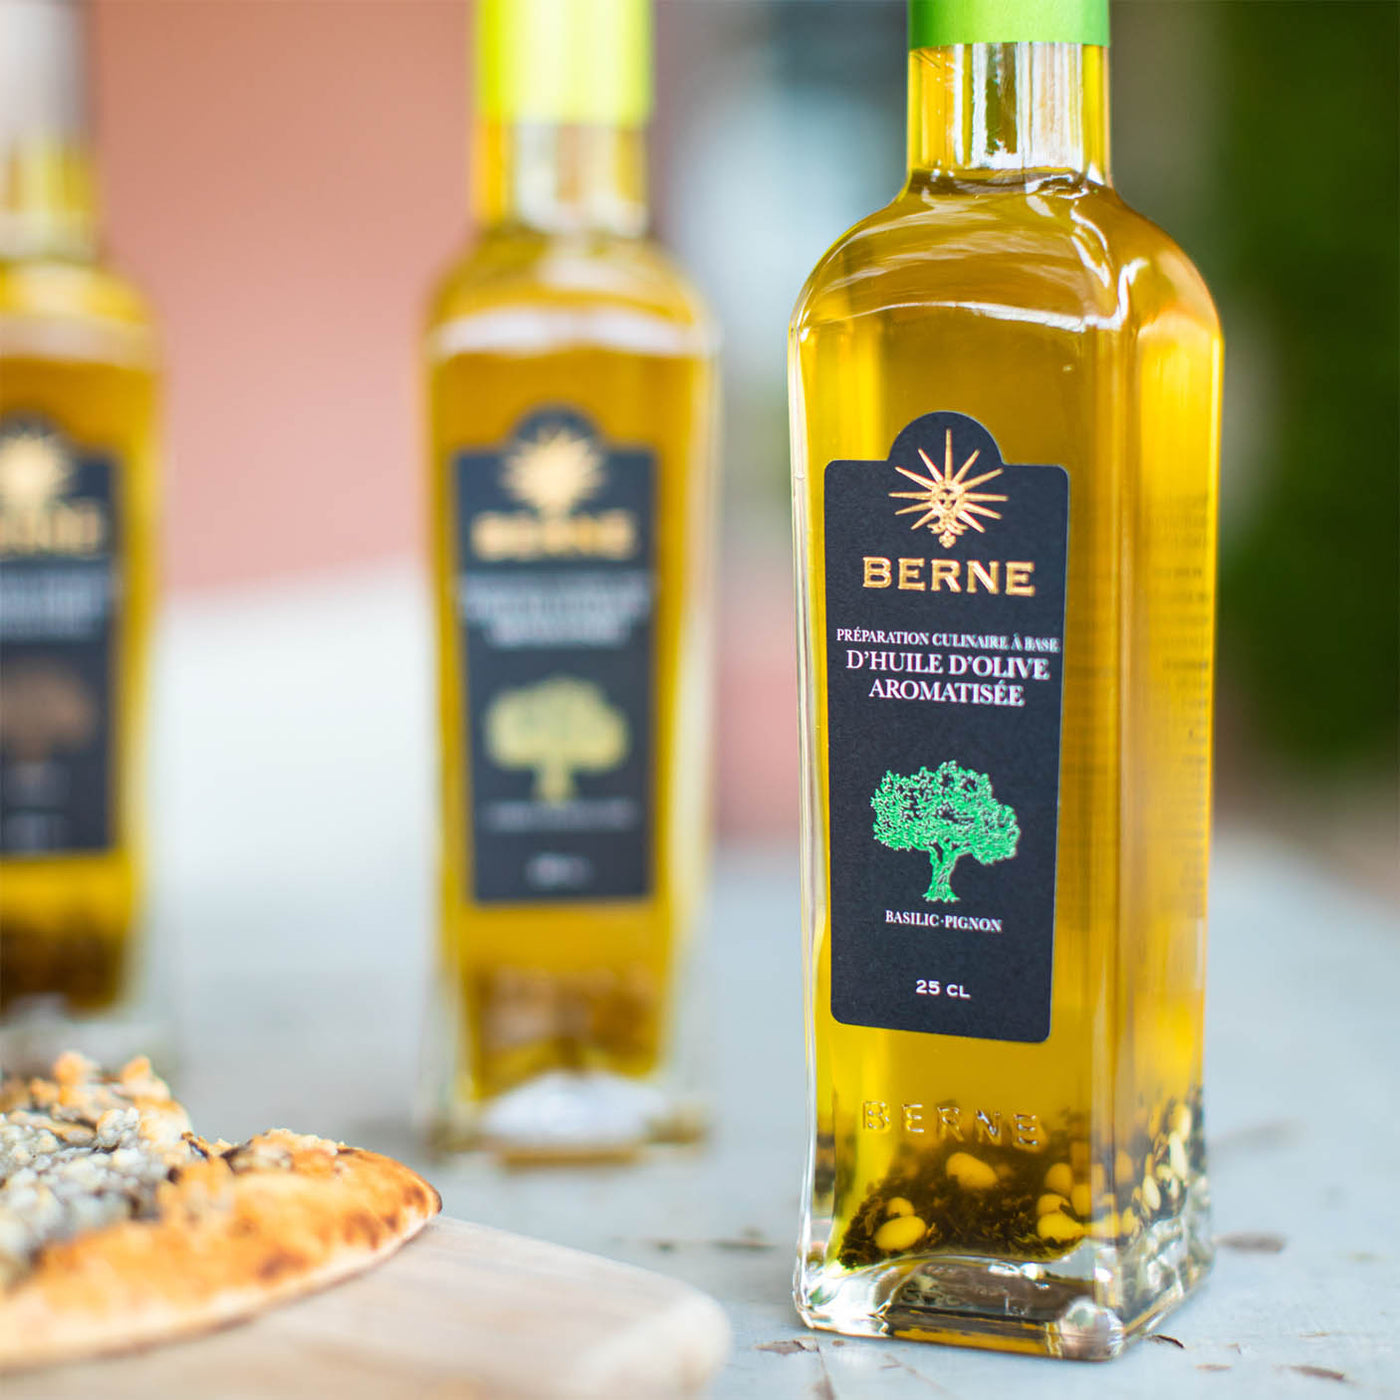 Berne - Huile d'Olive aromatisée Basilic & Pignon